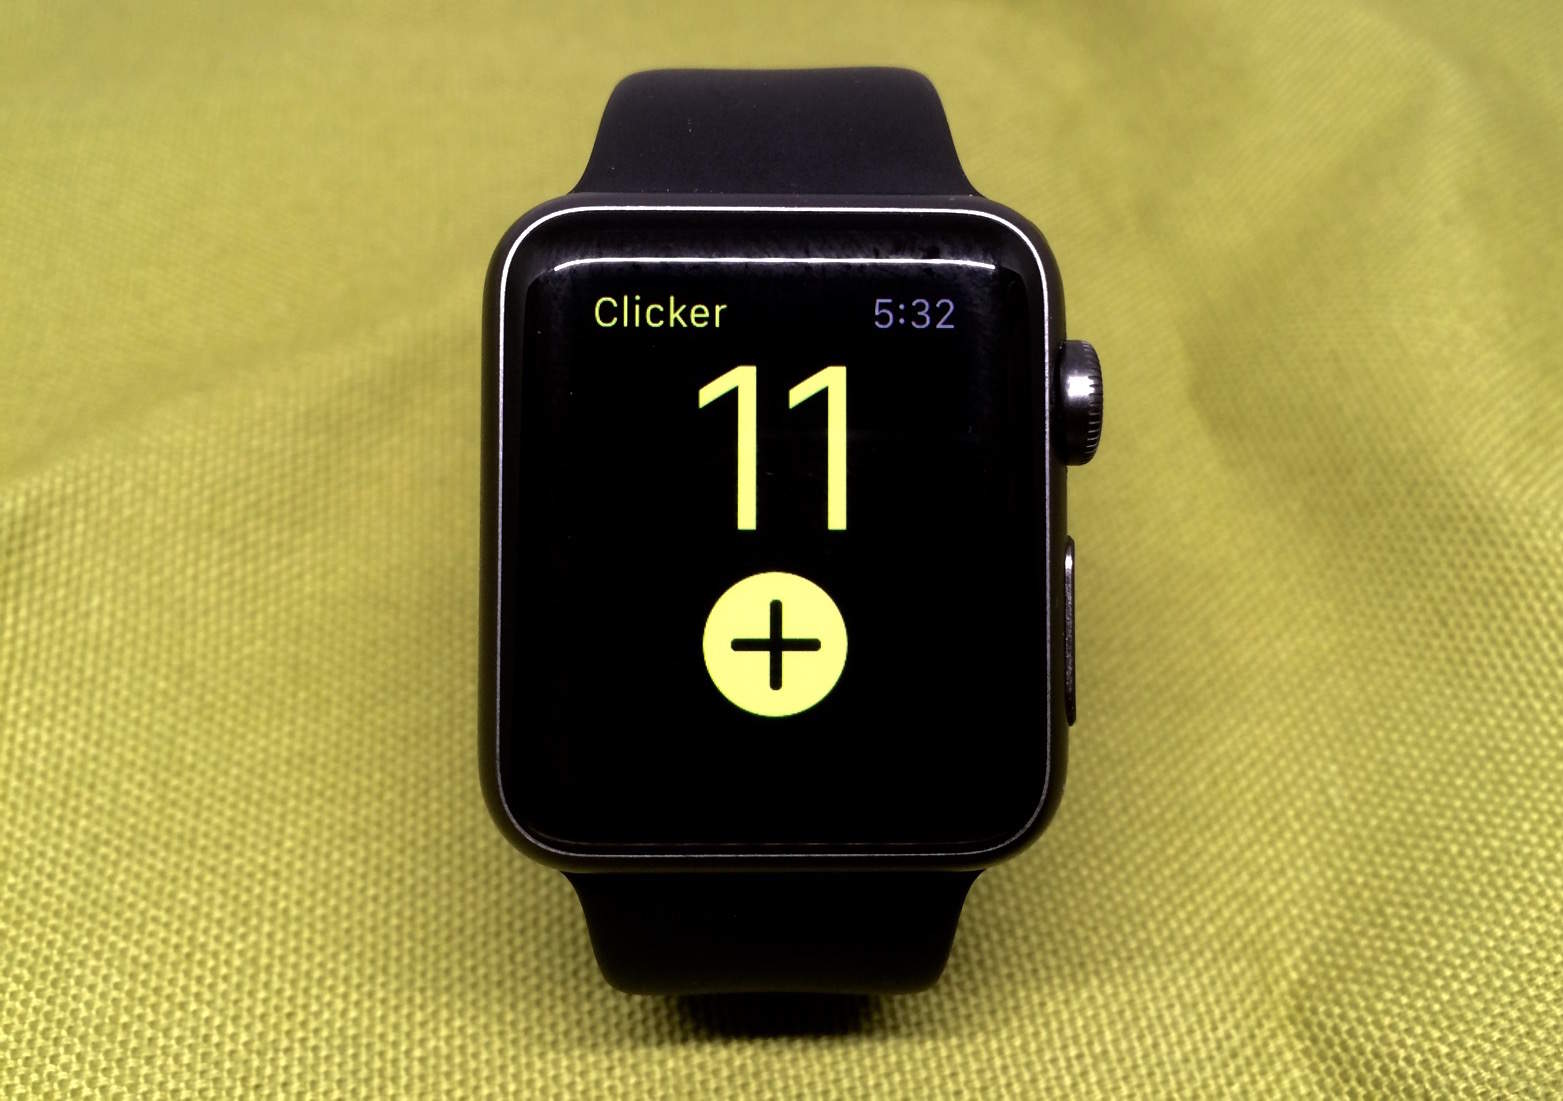 Clicker app for Apple Watch